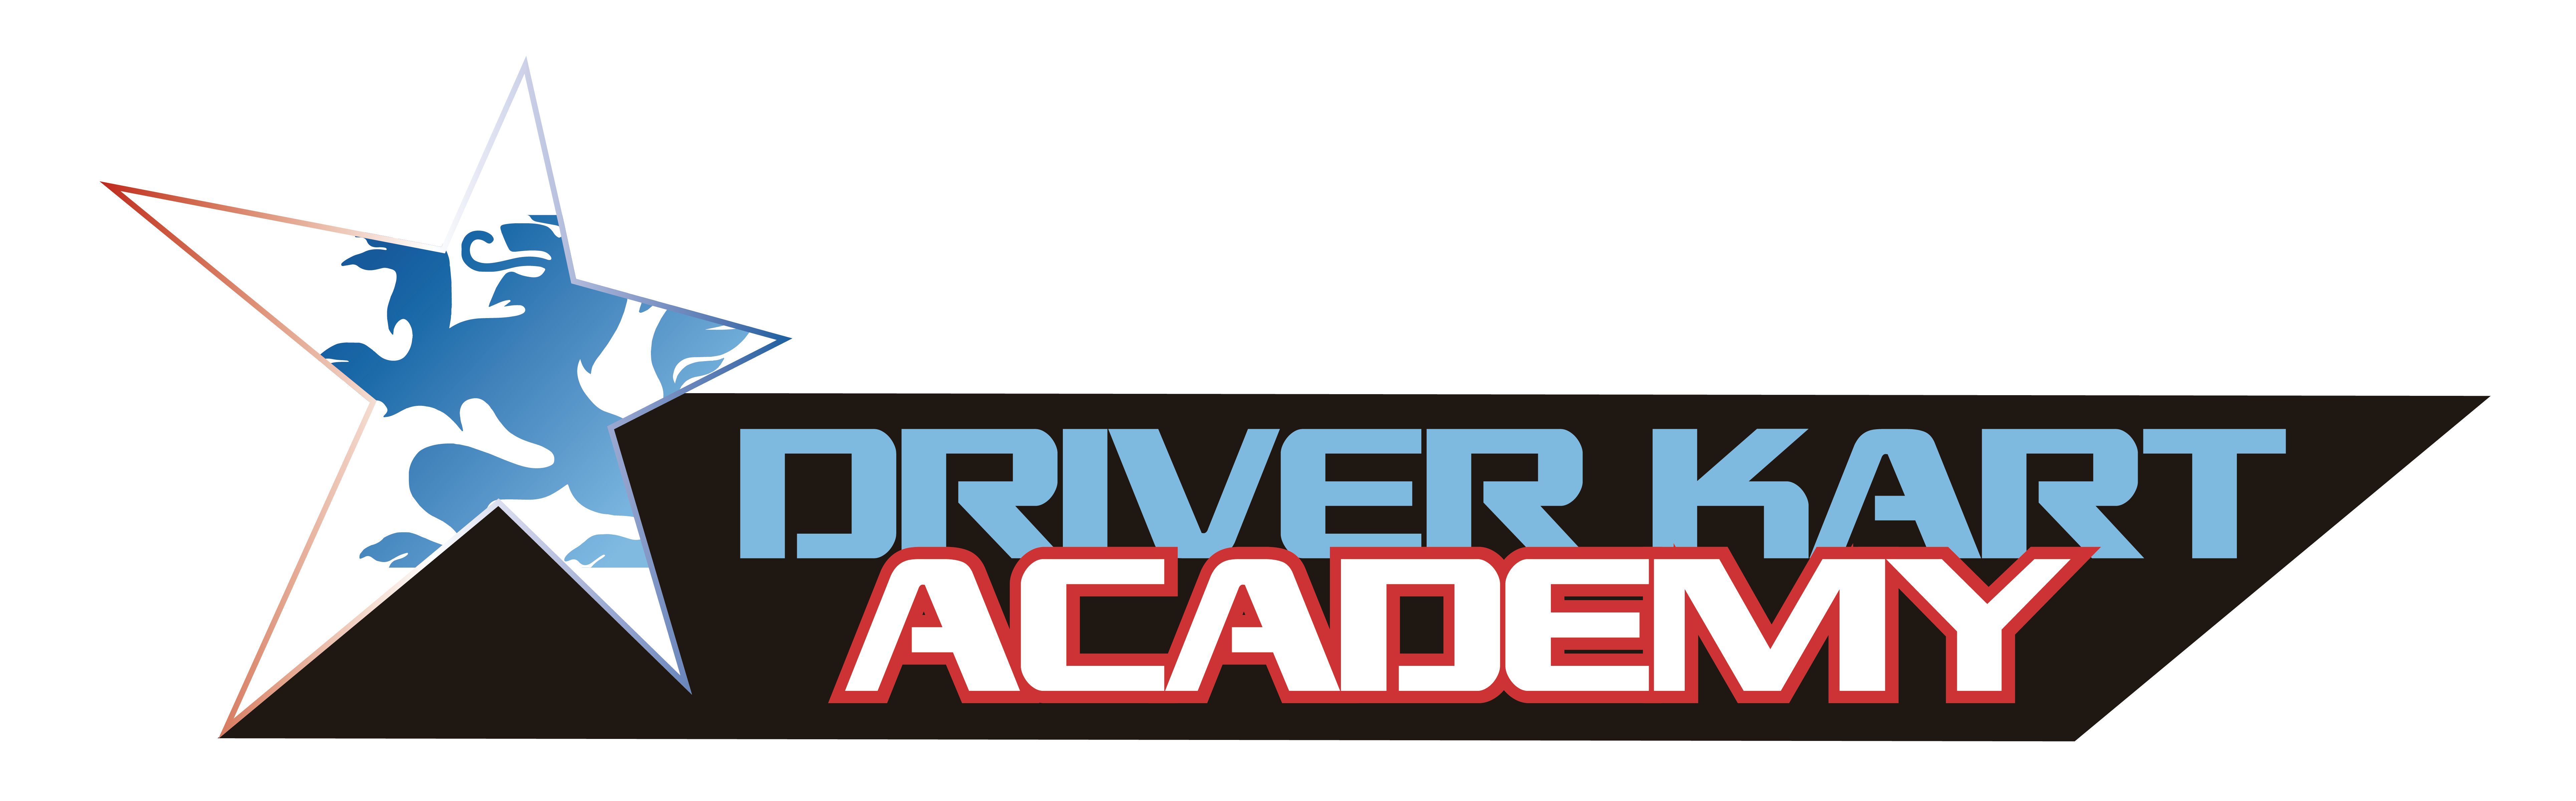 Driver Kart Academy